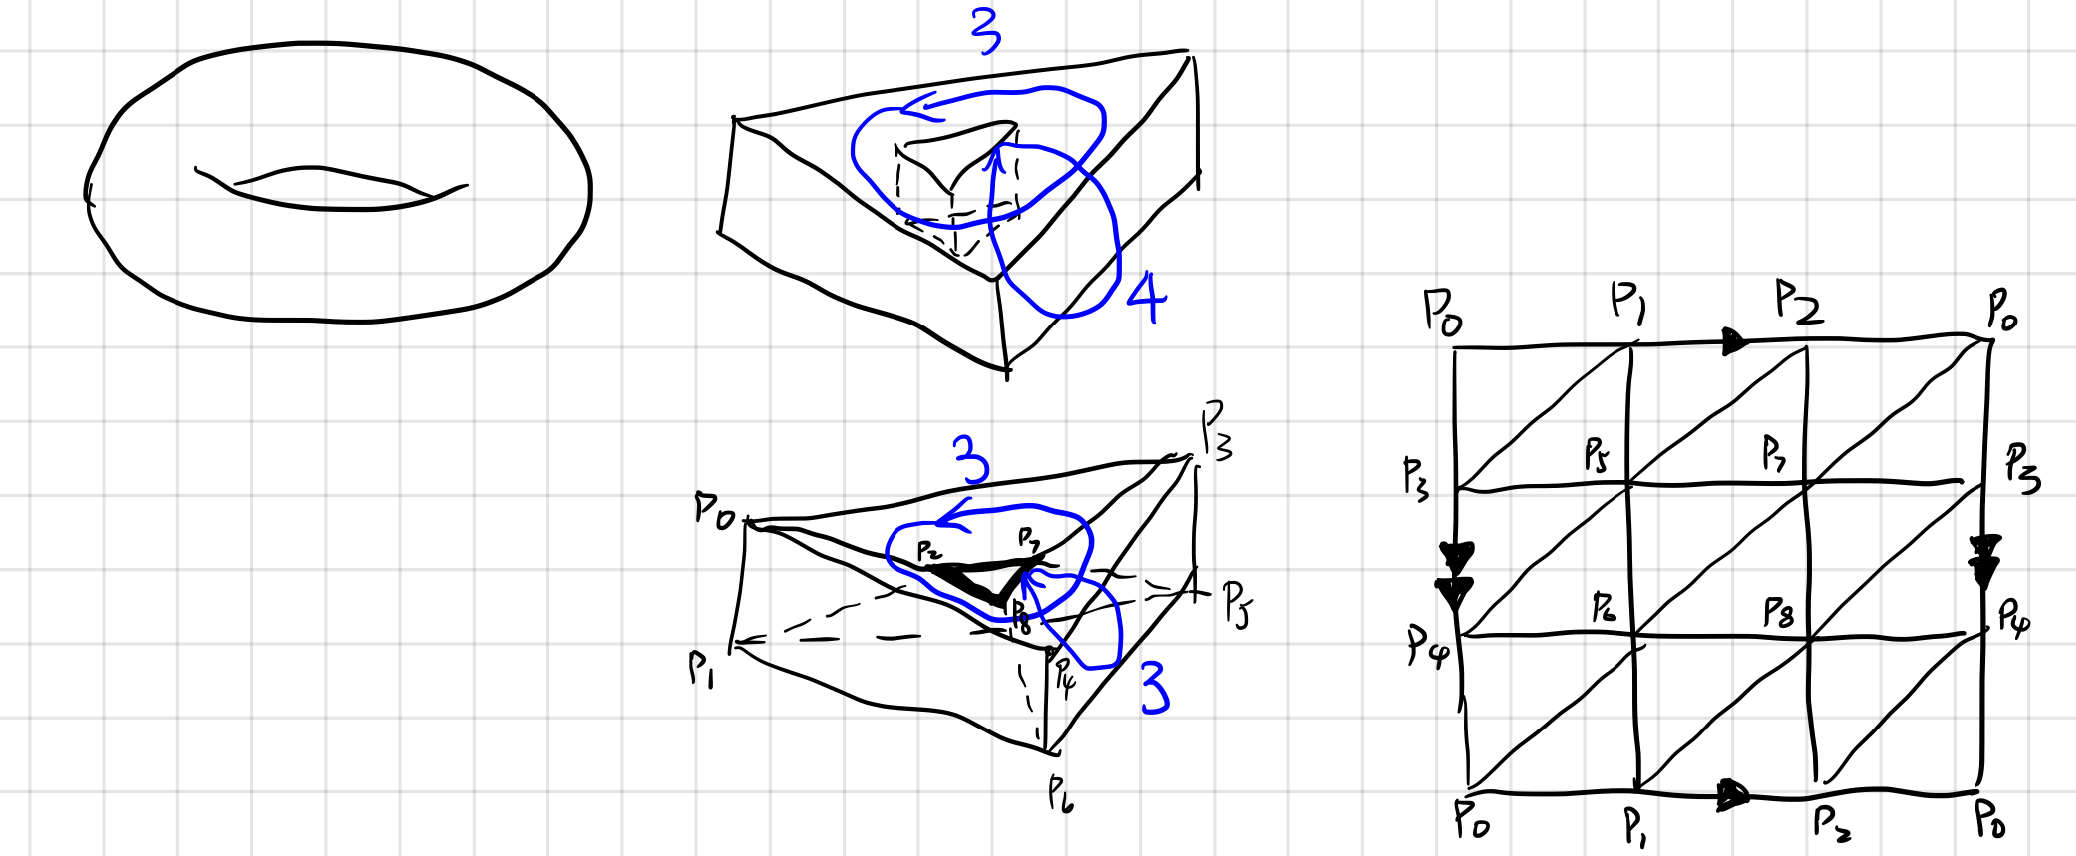 Triangulation of Torus